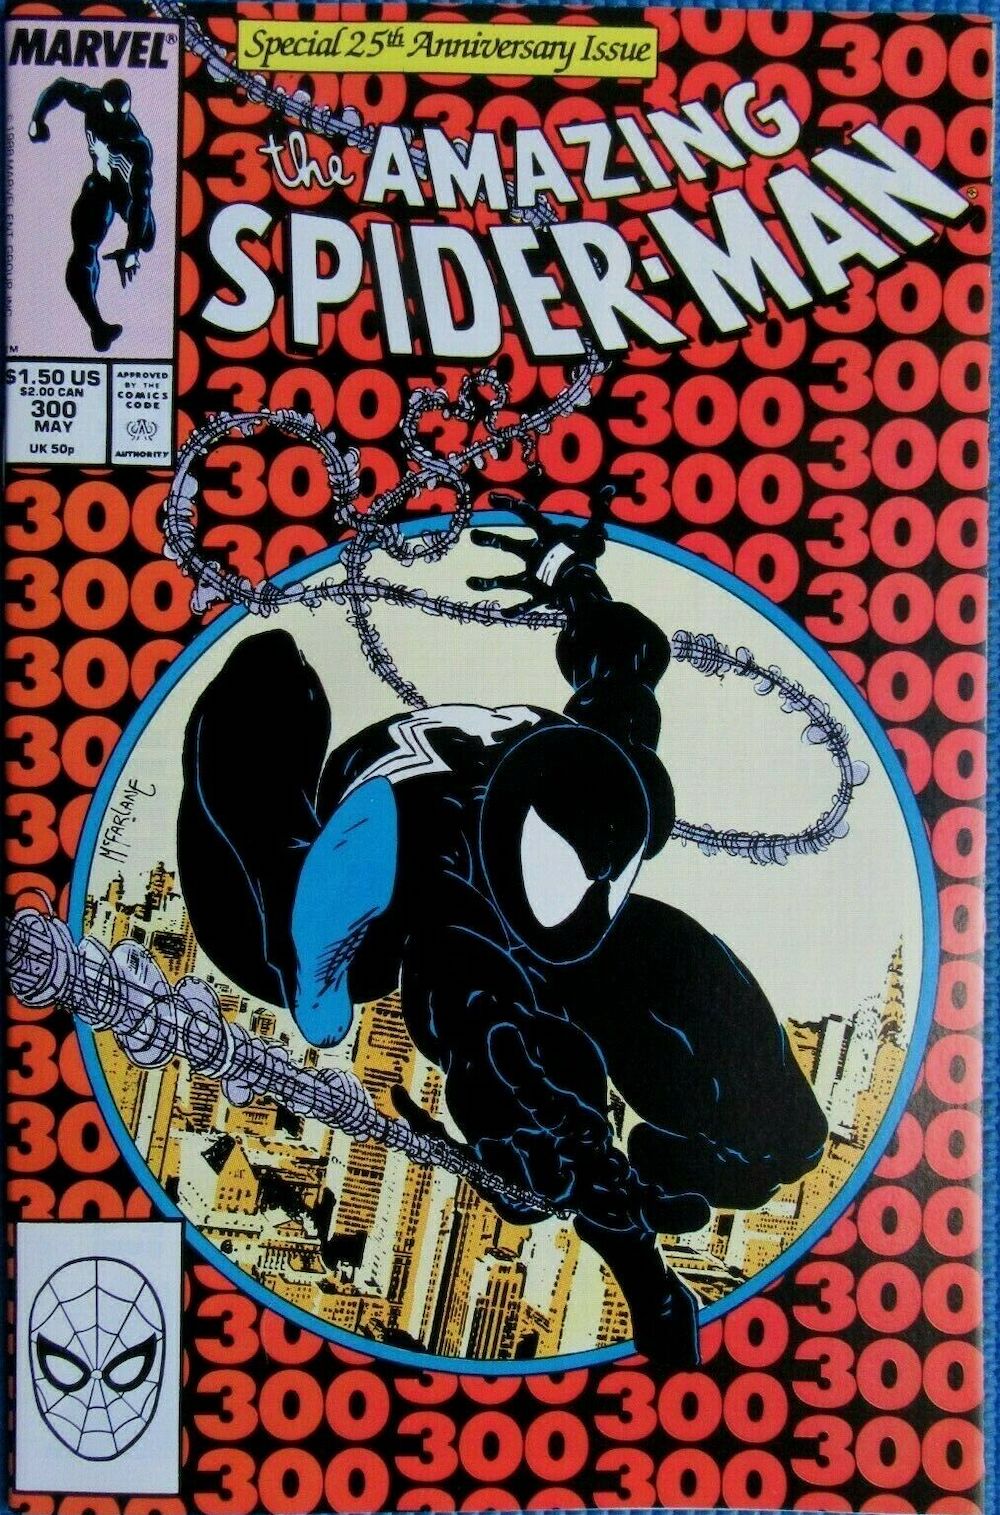 Amazing Spider-Man #300, Uncertified NM+ 9.6, $2,850.00